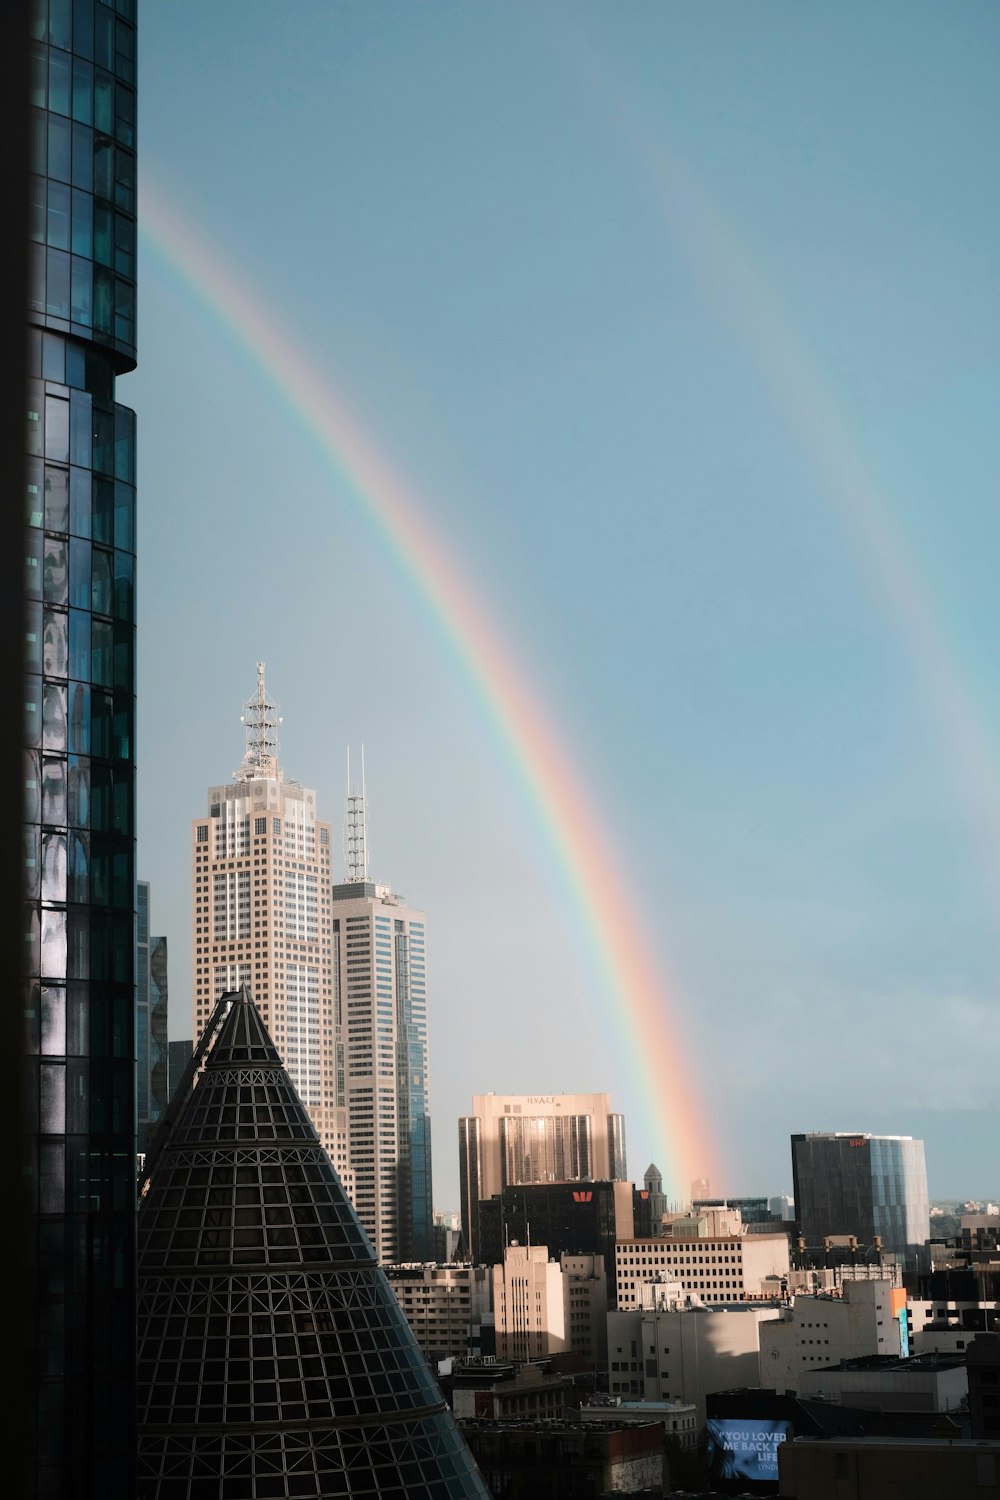 a double rainbow in the sky over a city